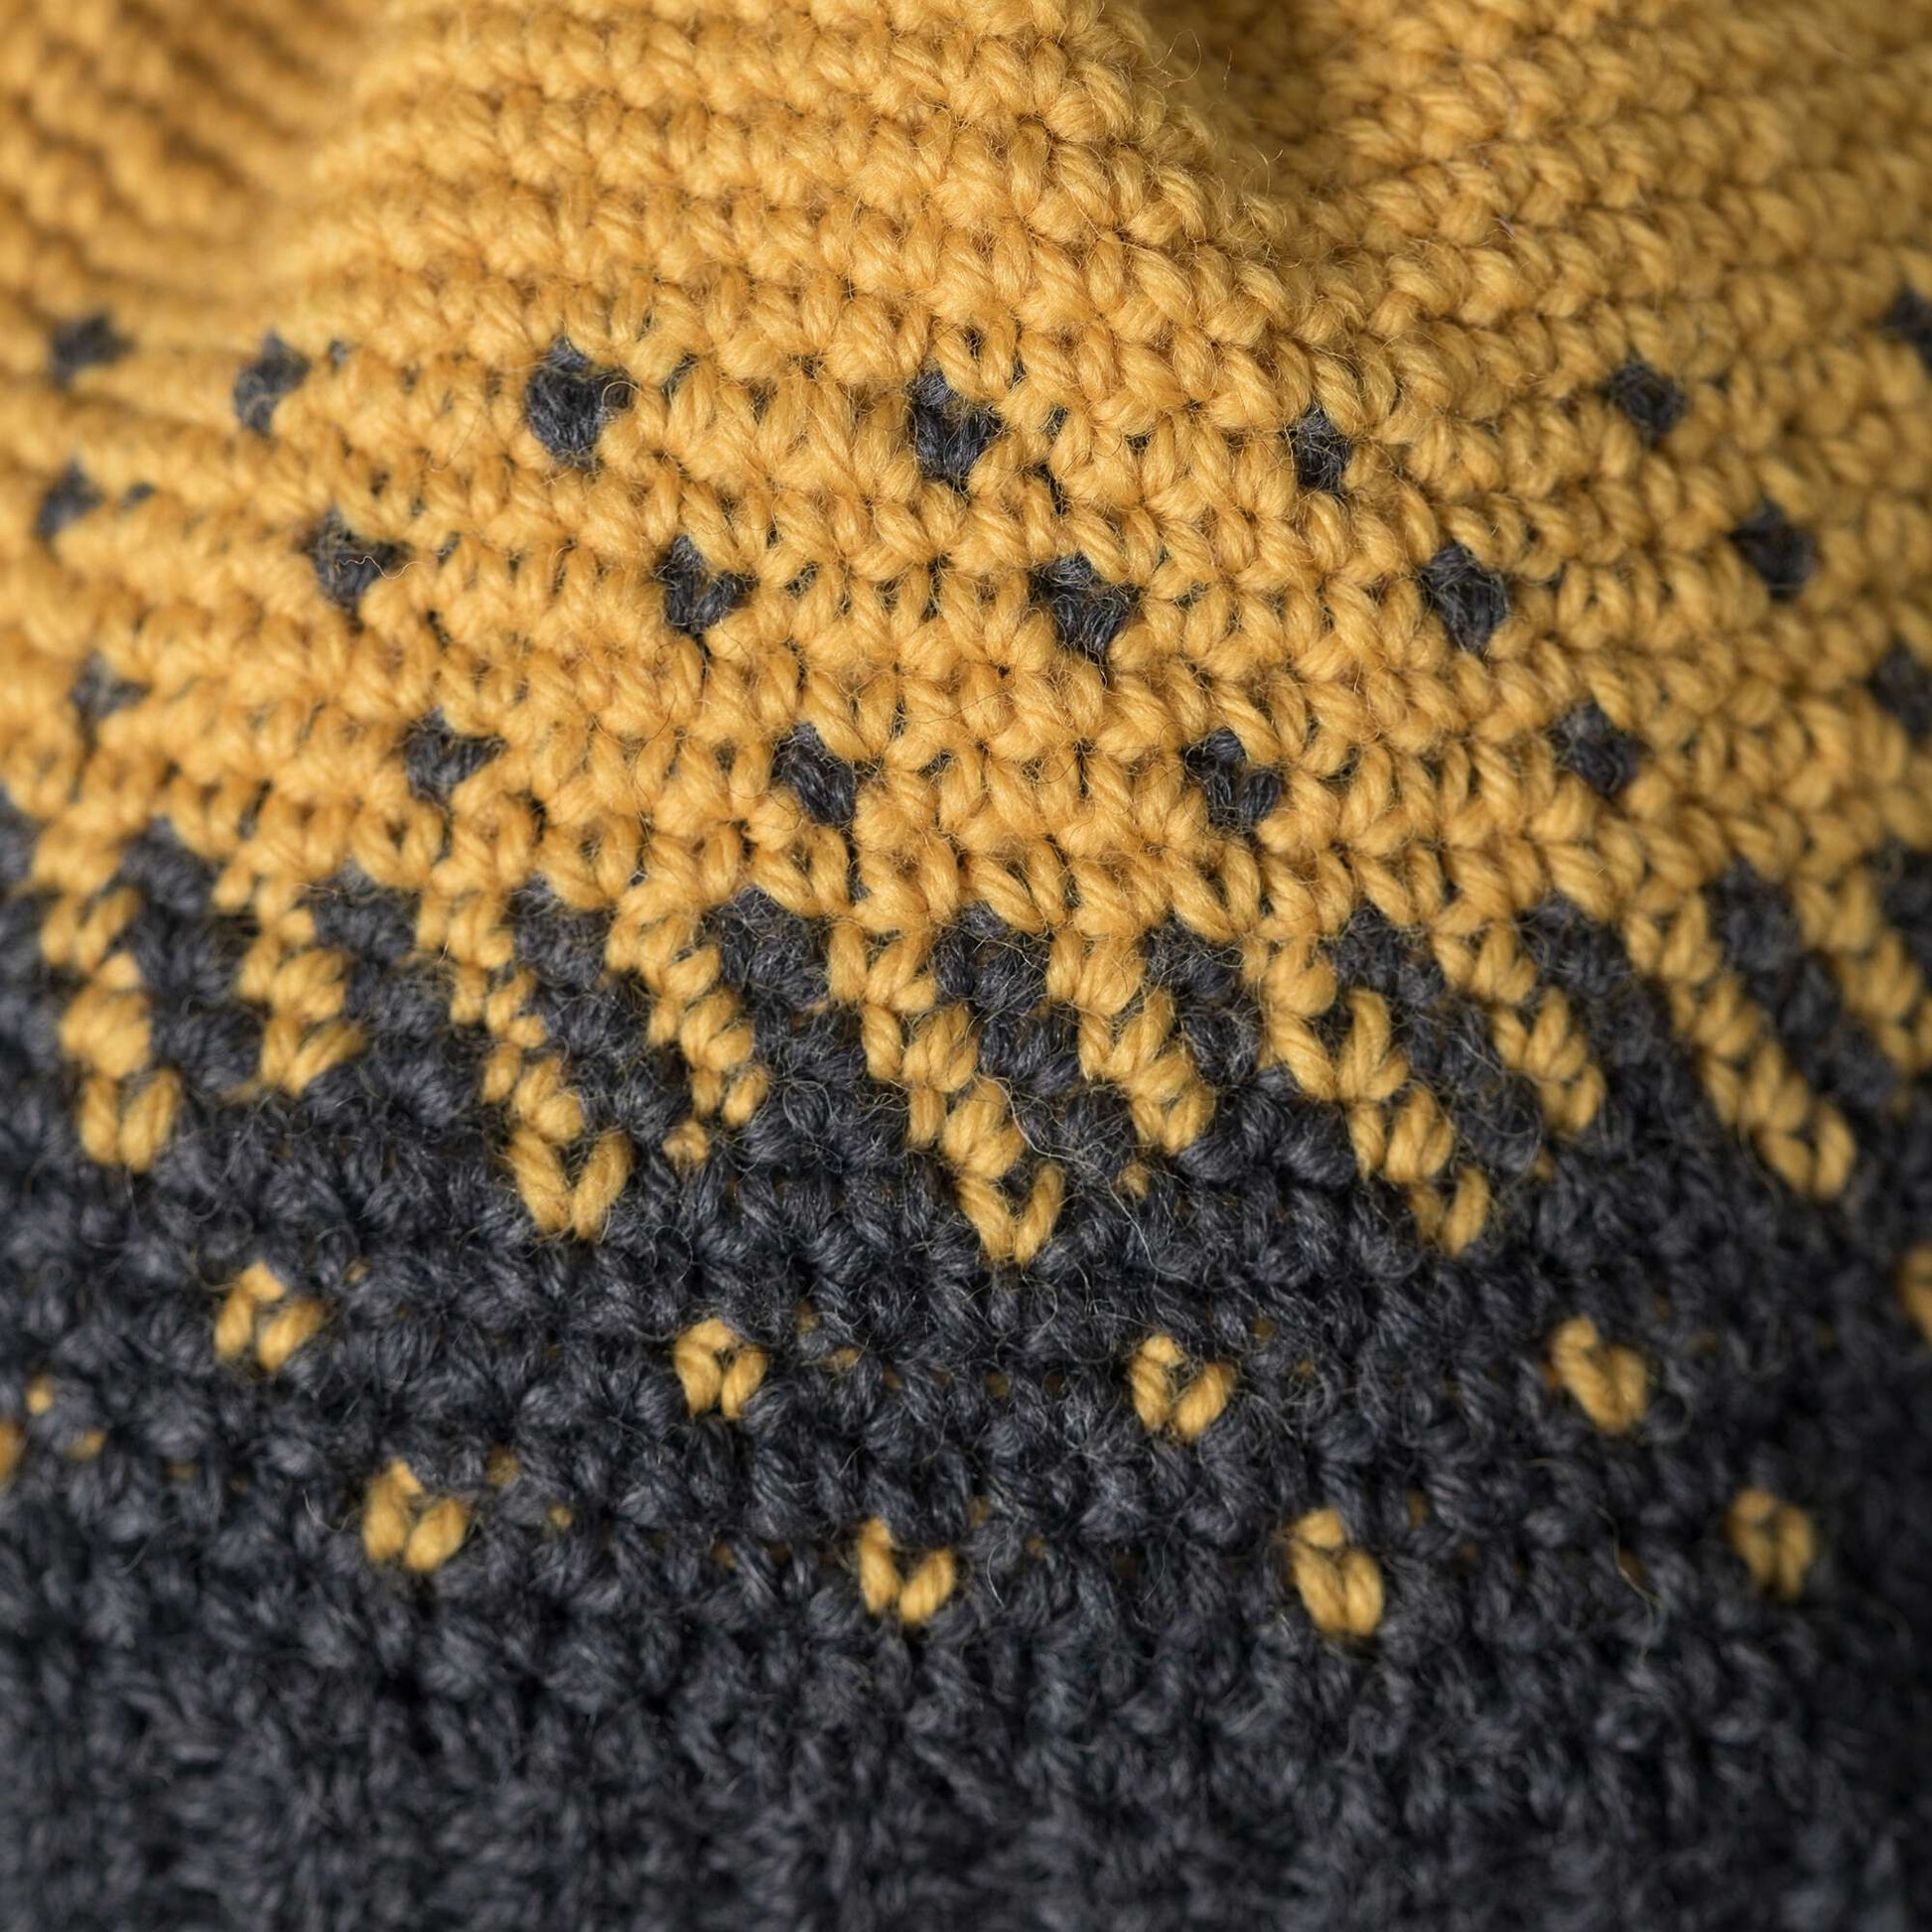 Patons Crochet Colorwork Hat Single Size